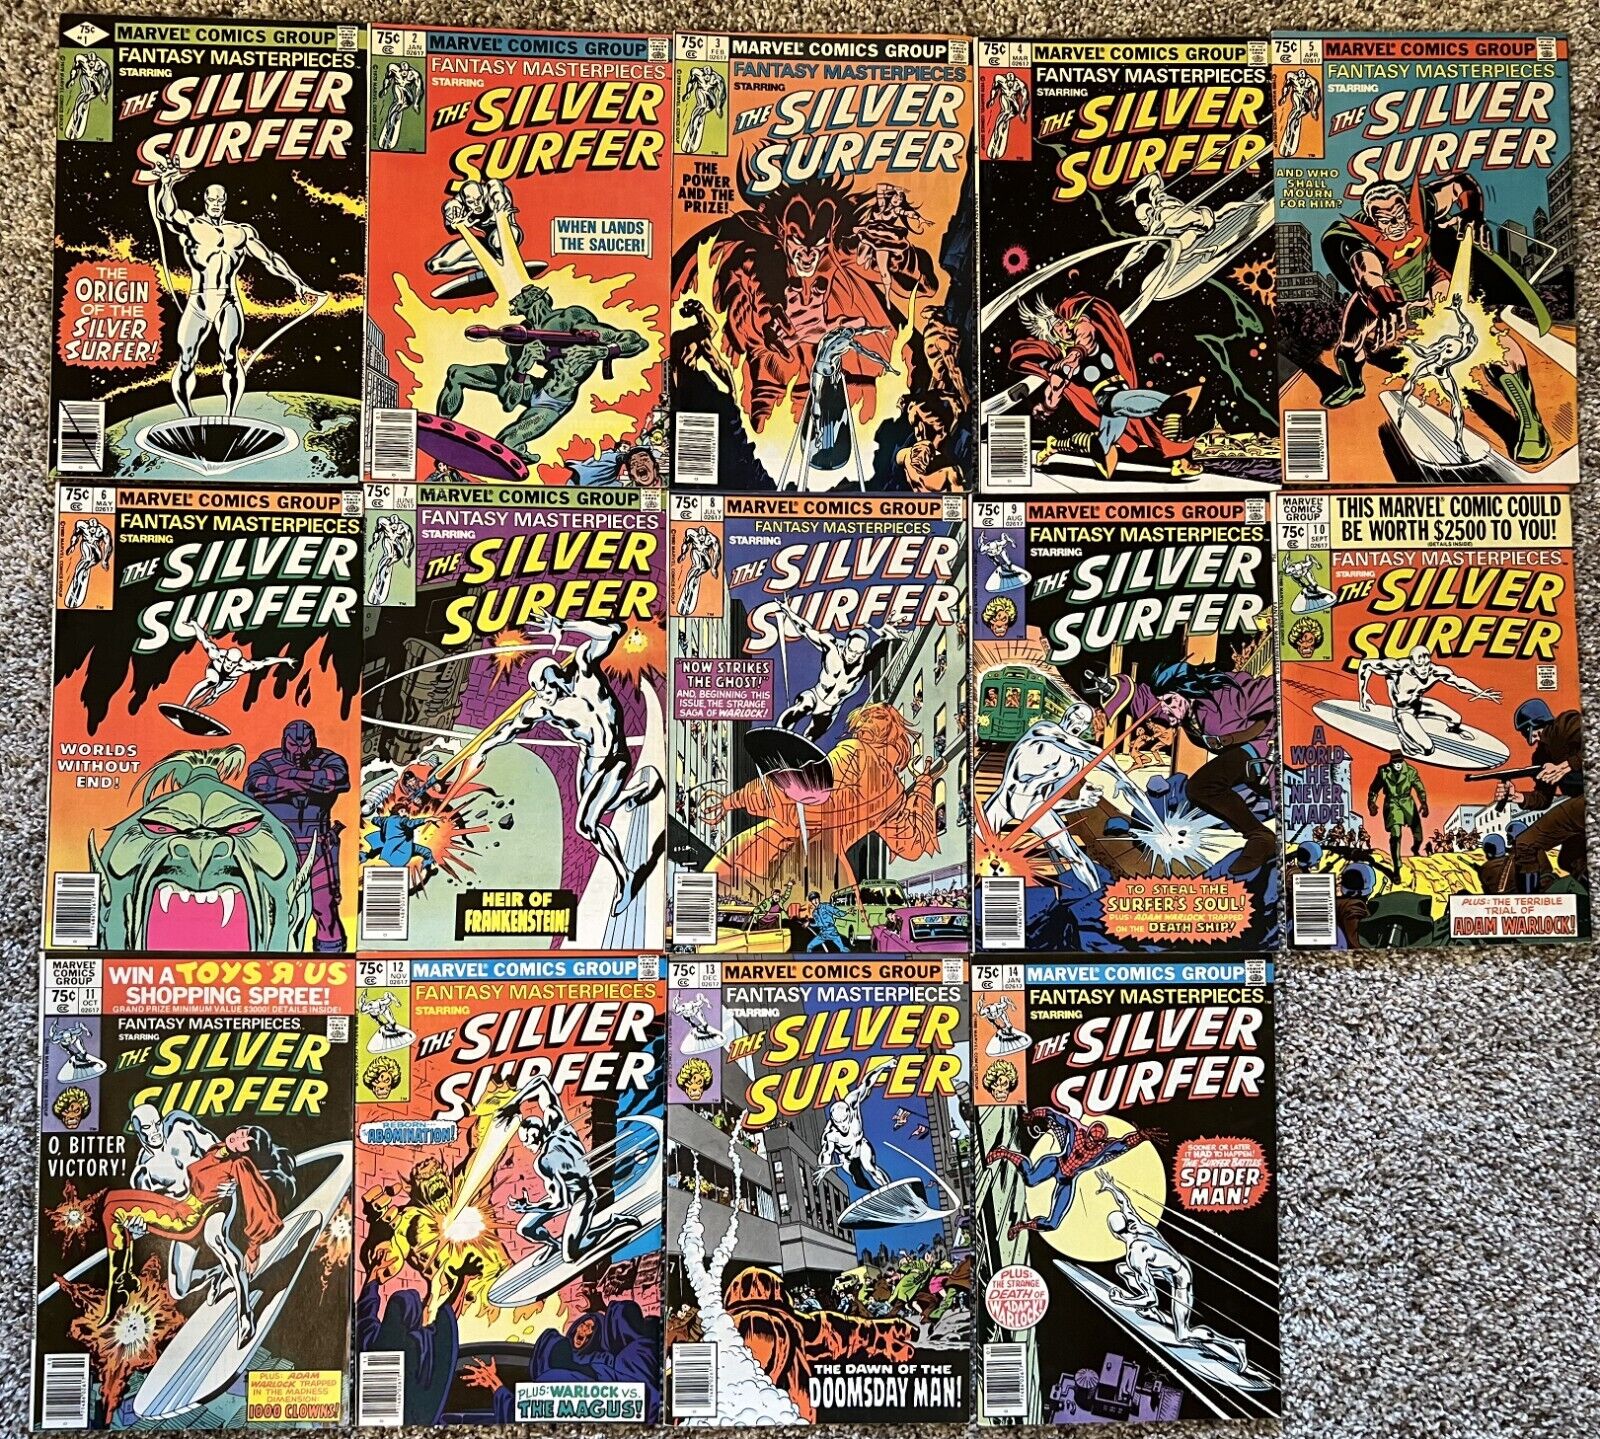 Fantasy Masterpieces v2 (1979) #1-14 Complete Series 1979 Marvel - Silver Surfer